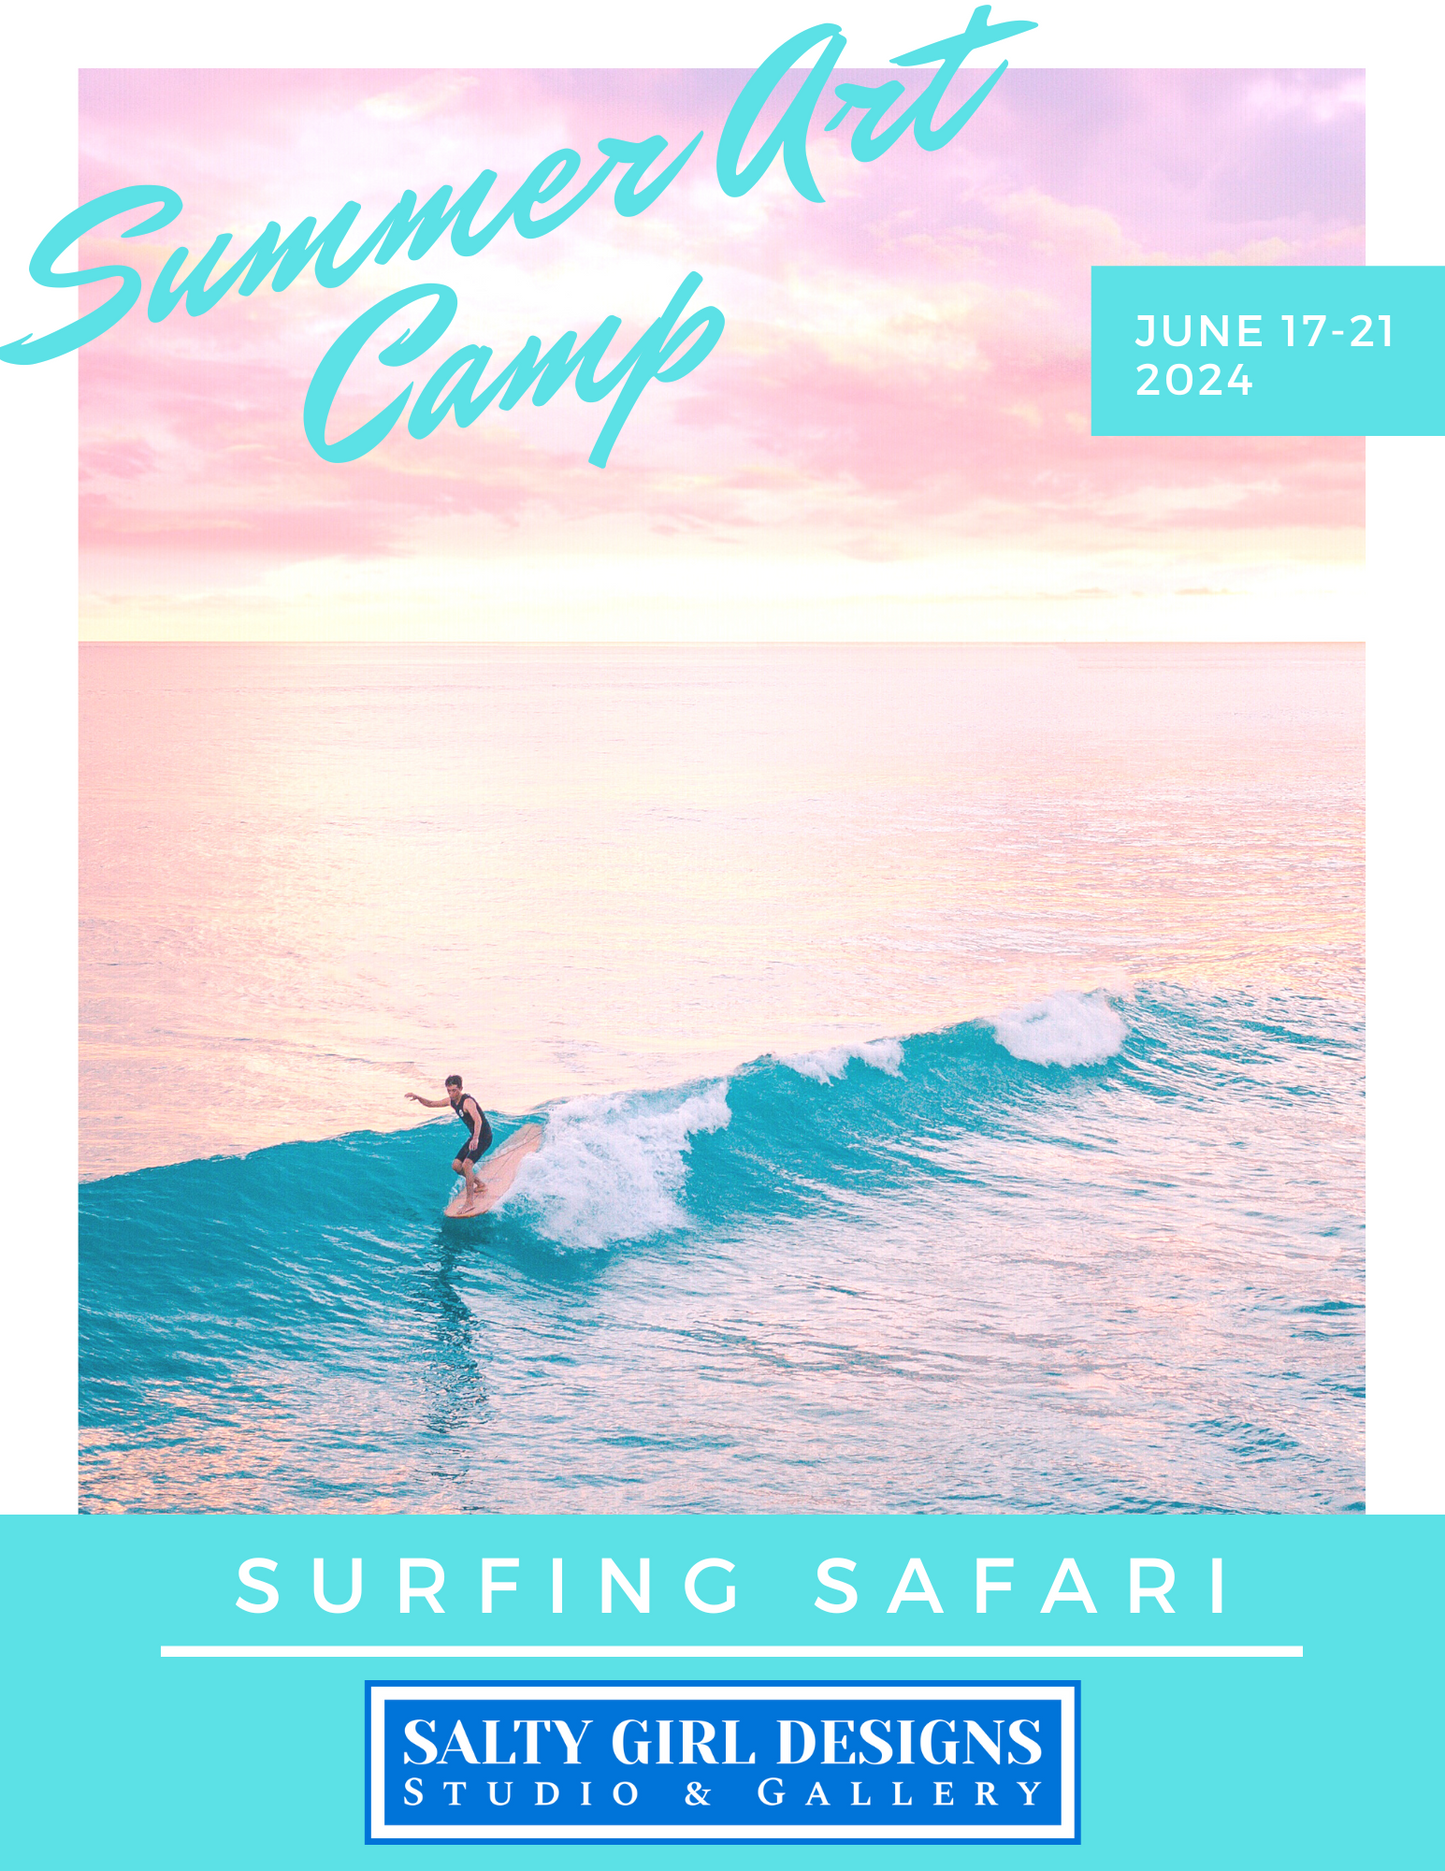 Surfing Safari, Summer Art Camp, June 17-21